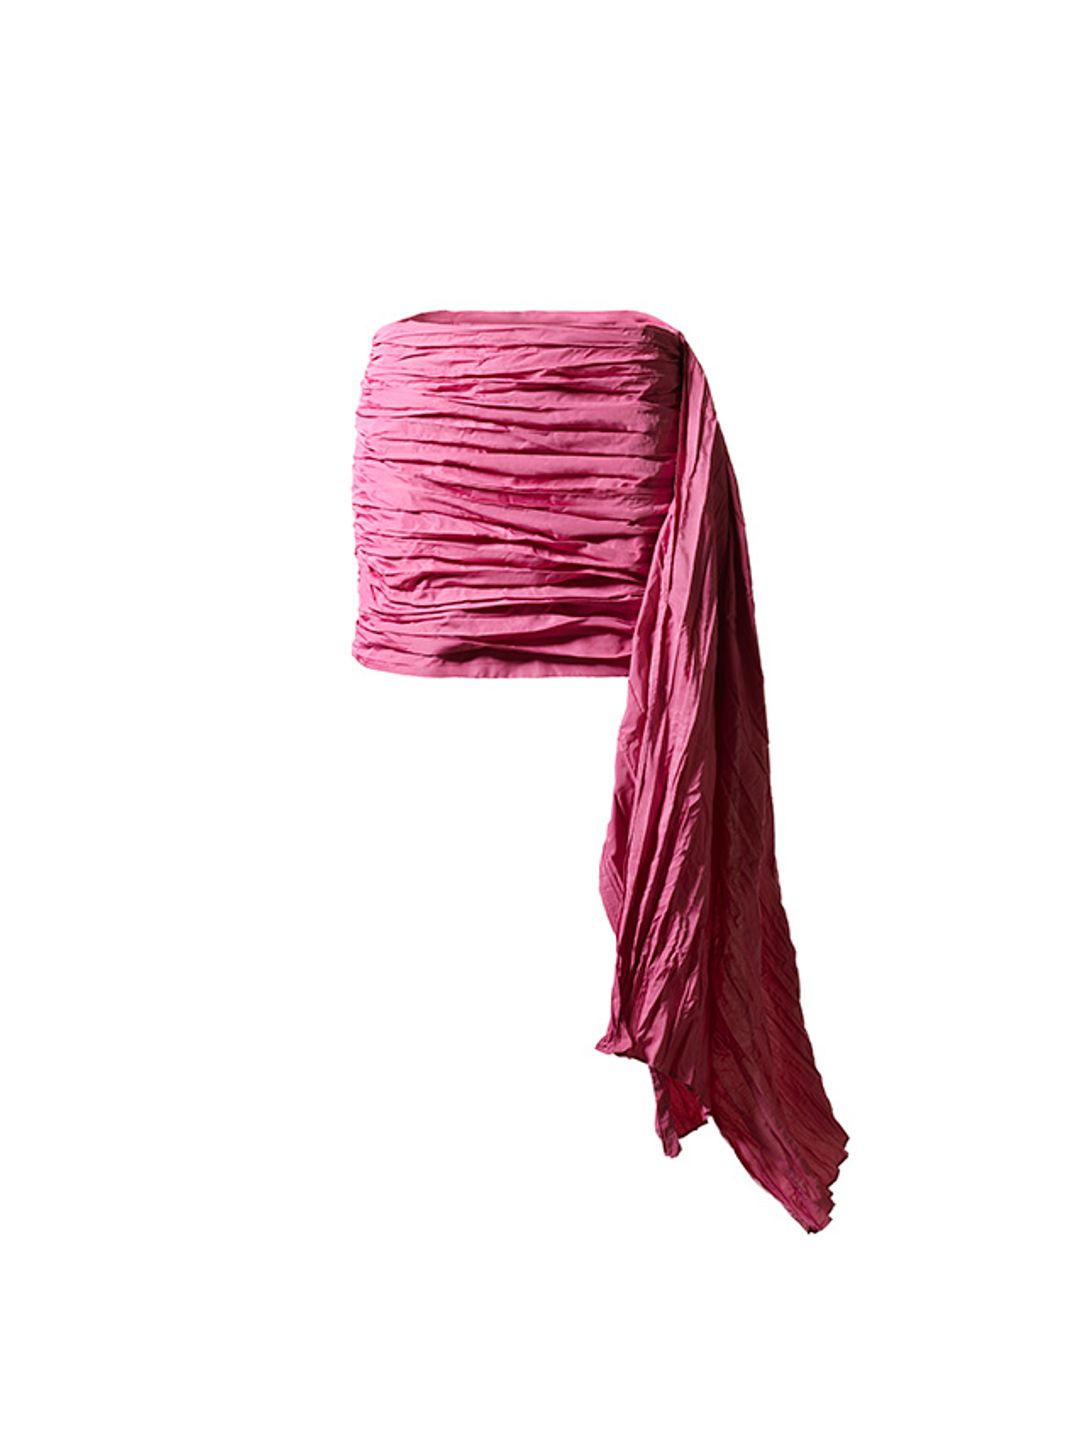 H&M STUDIO’S HOLIDAY CAPSULE pink skirt prada